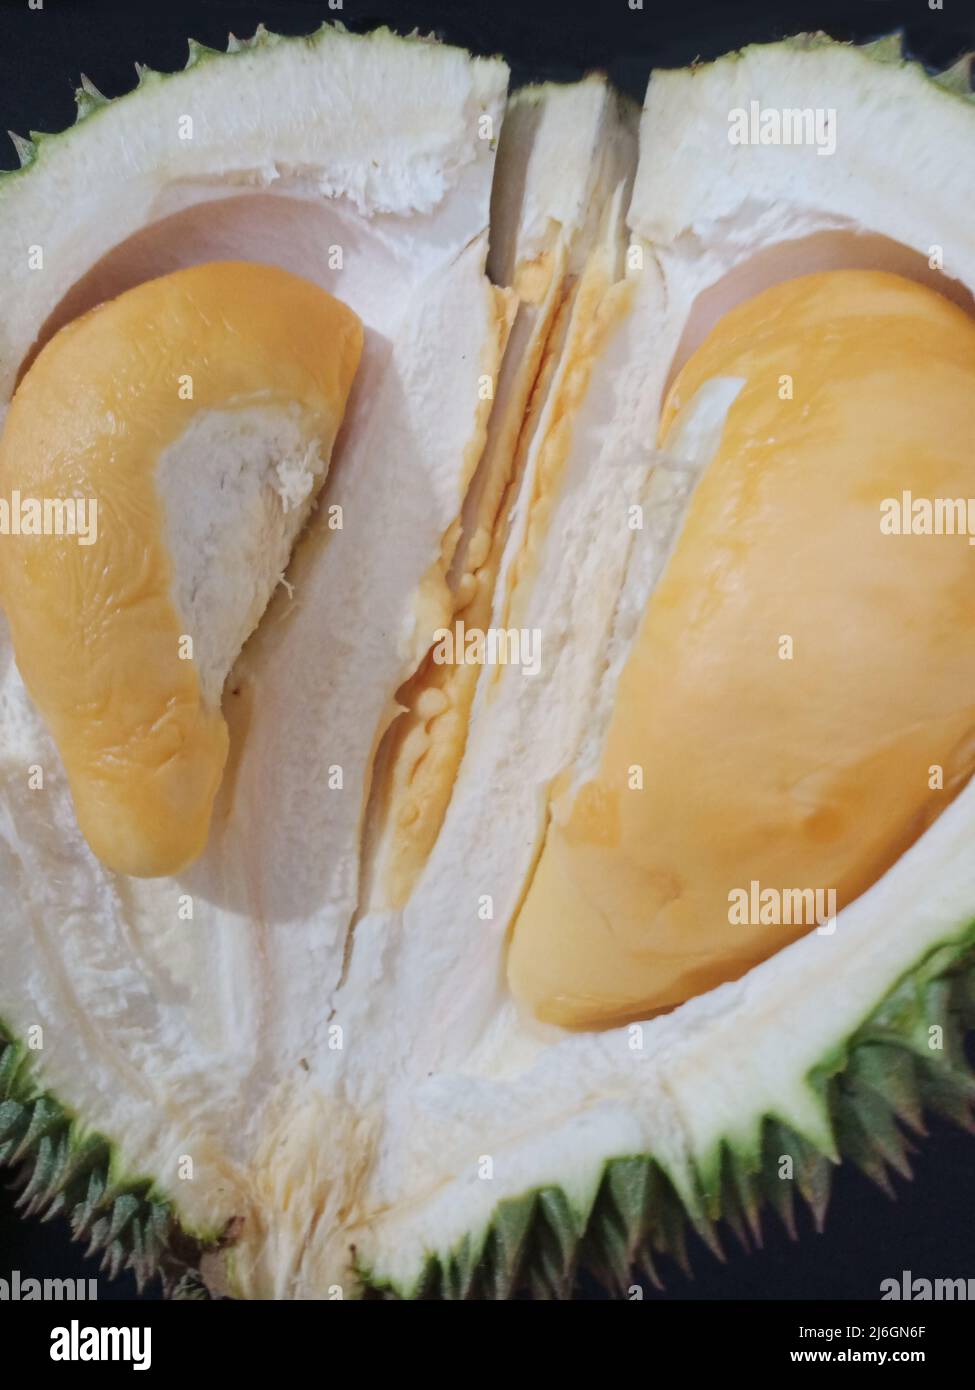 Opened durian Malaysian fruit Stock Photo